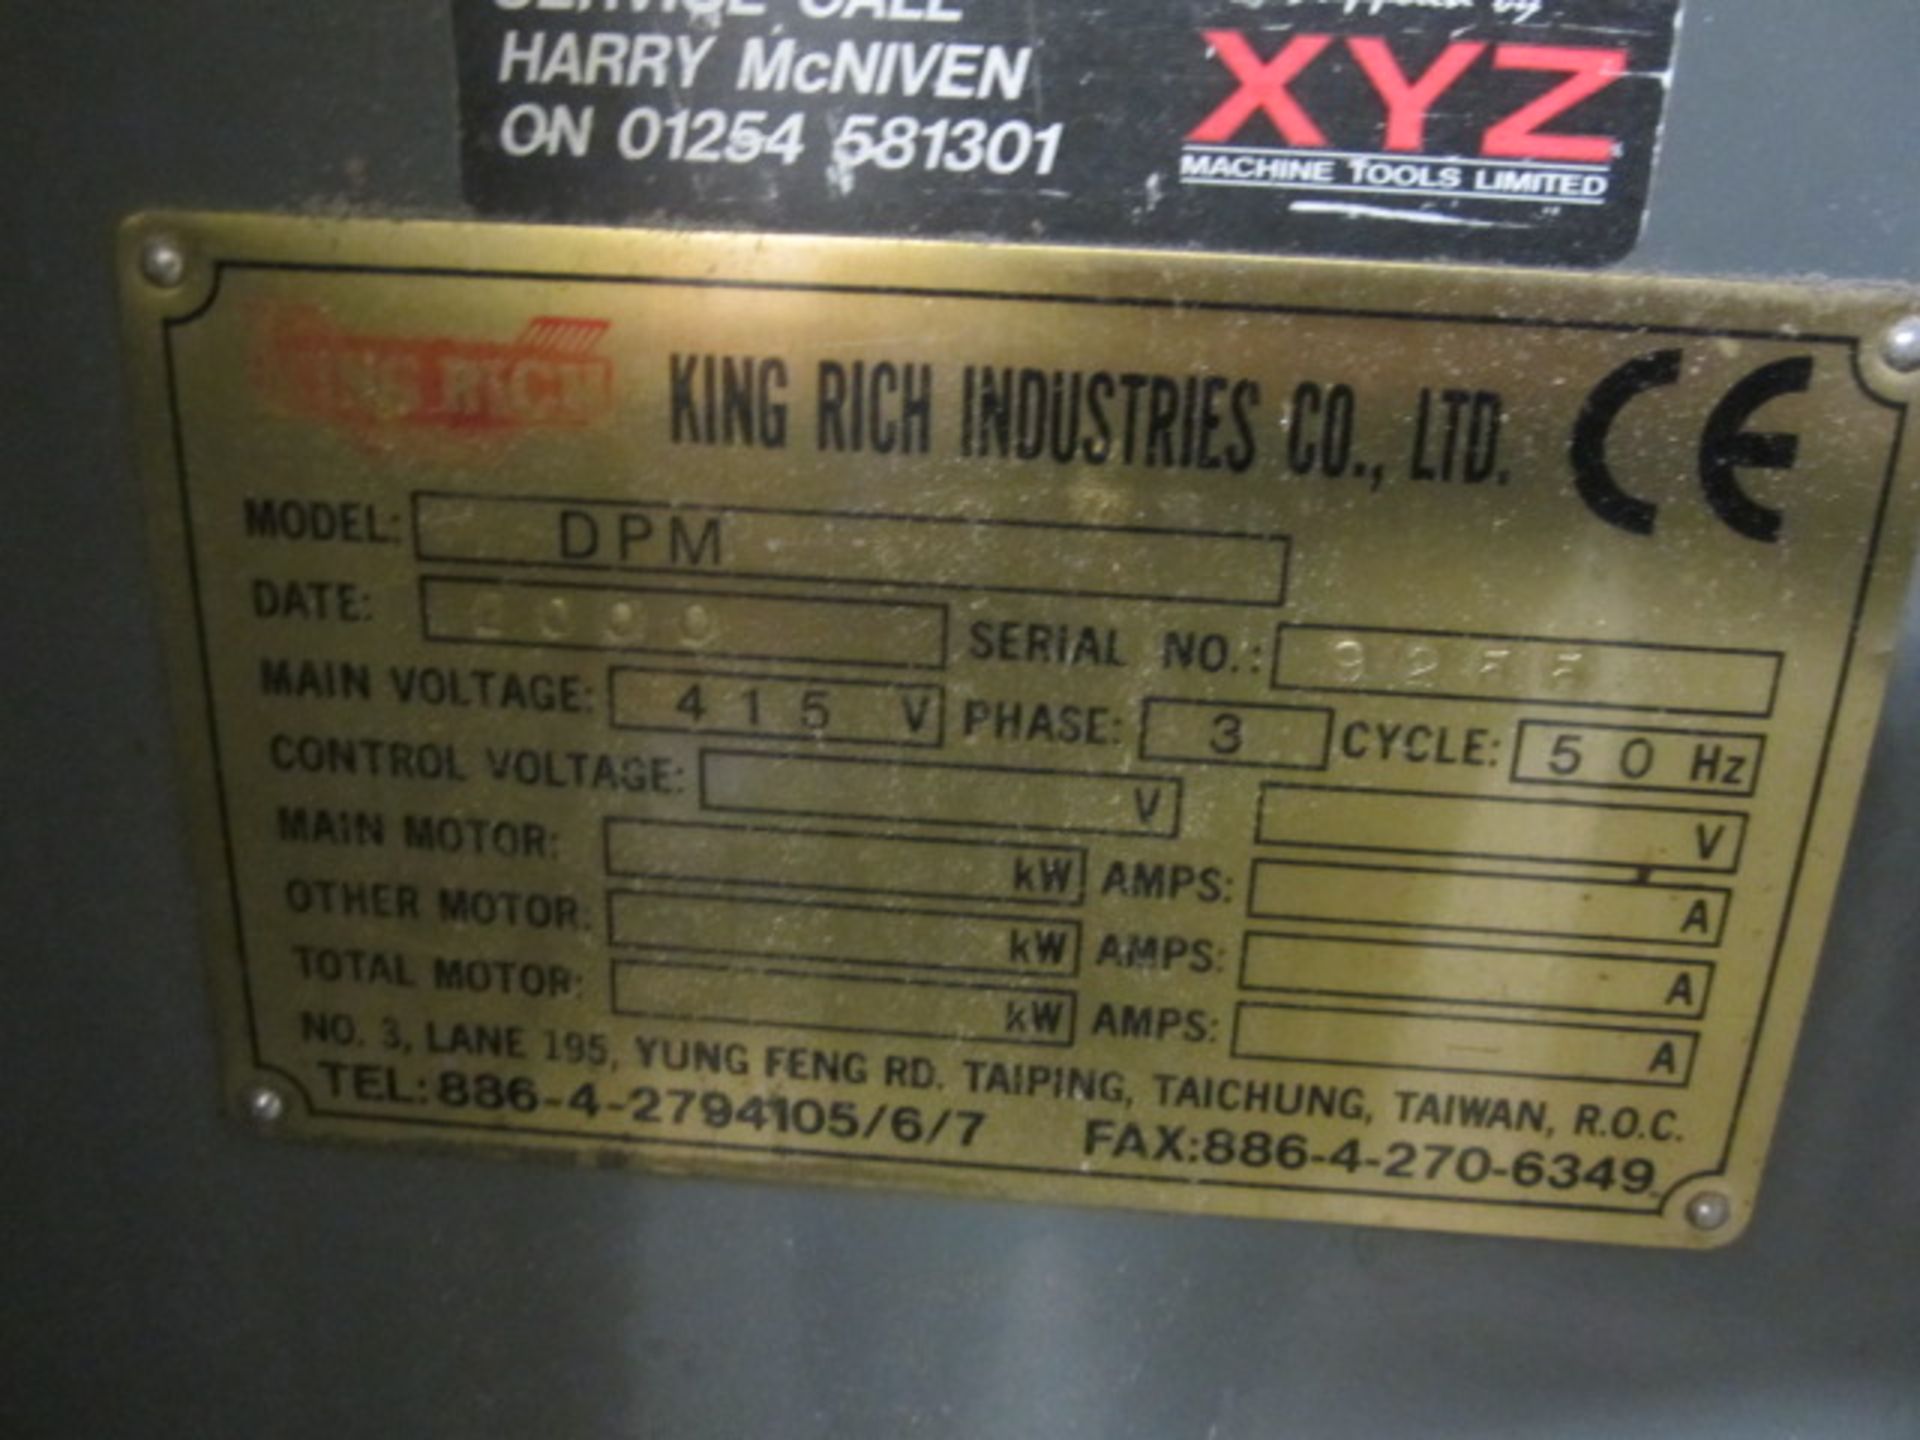 King Rich DPM CNC turret head vertical milling machine, serial no. 9255 (2000), Prototrak A.G.E.3 - Image 6 of 6